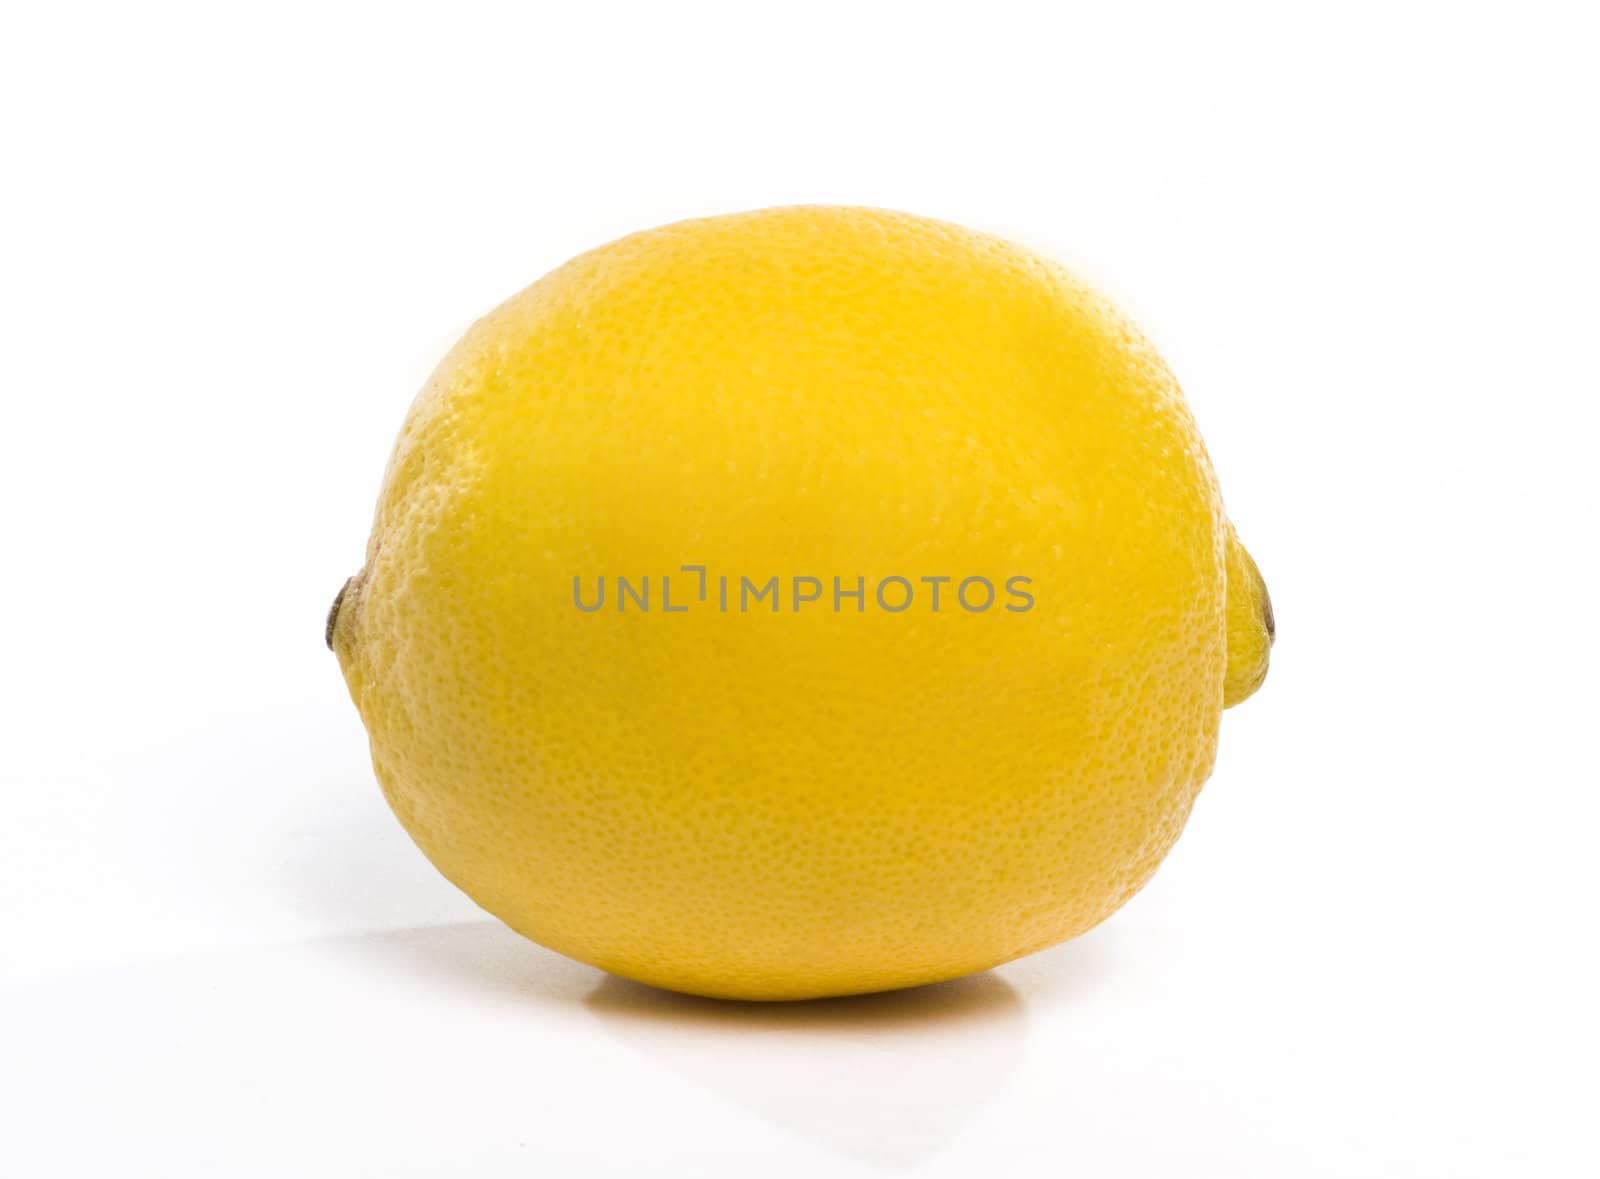 Yellow lemon over white background. Studio shot.